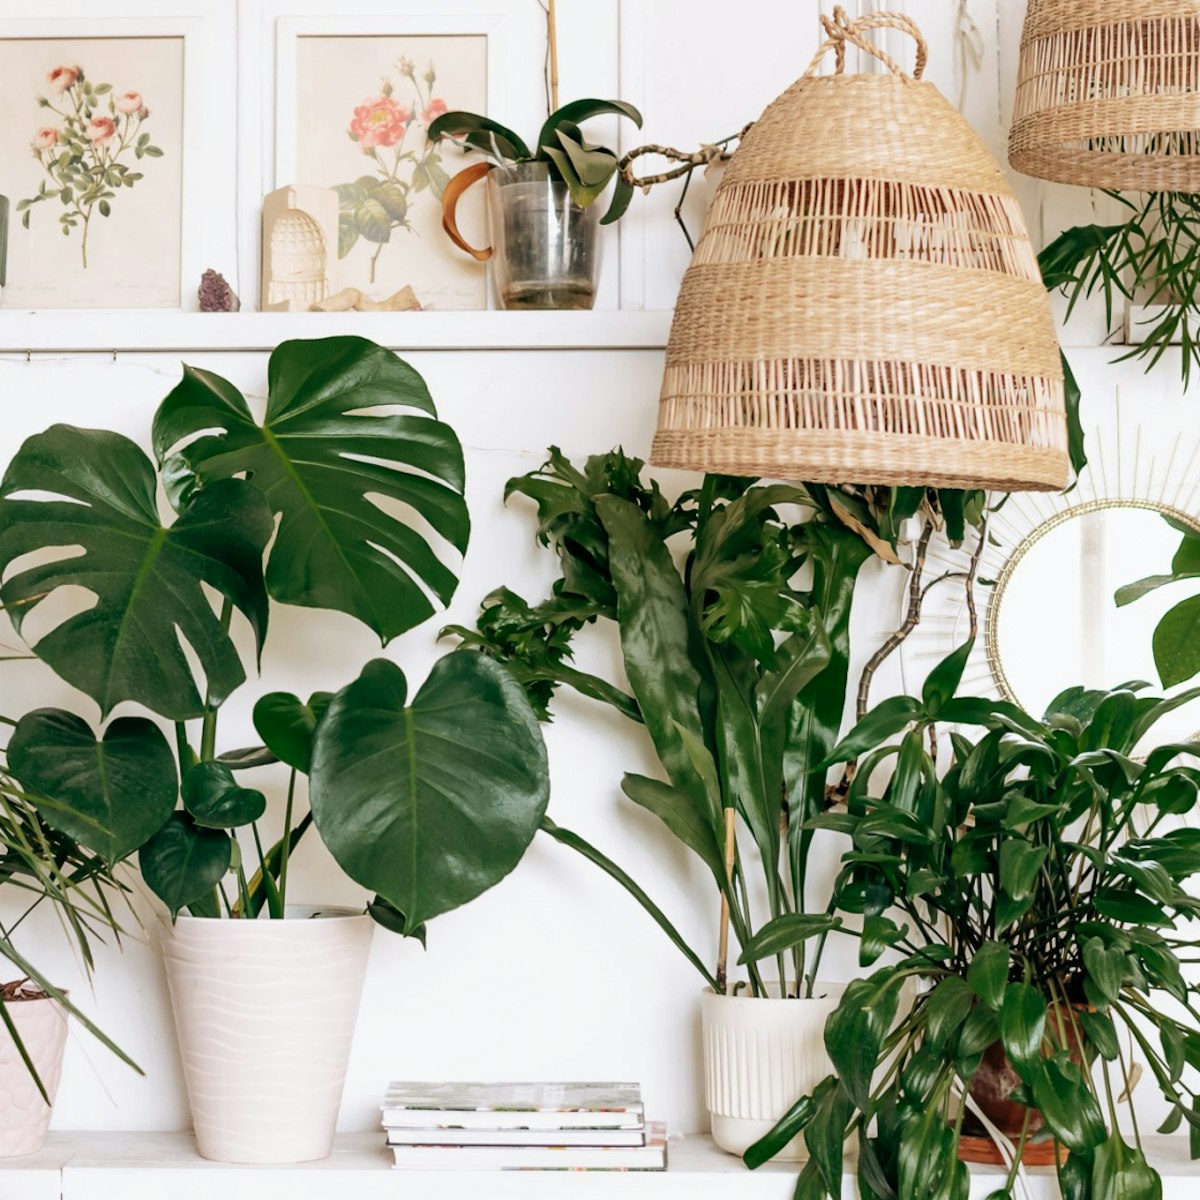 buy plants online: 11 online plant shops and garden centres